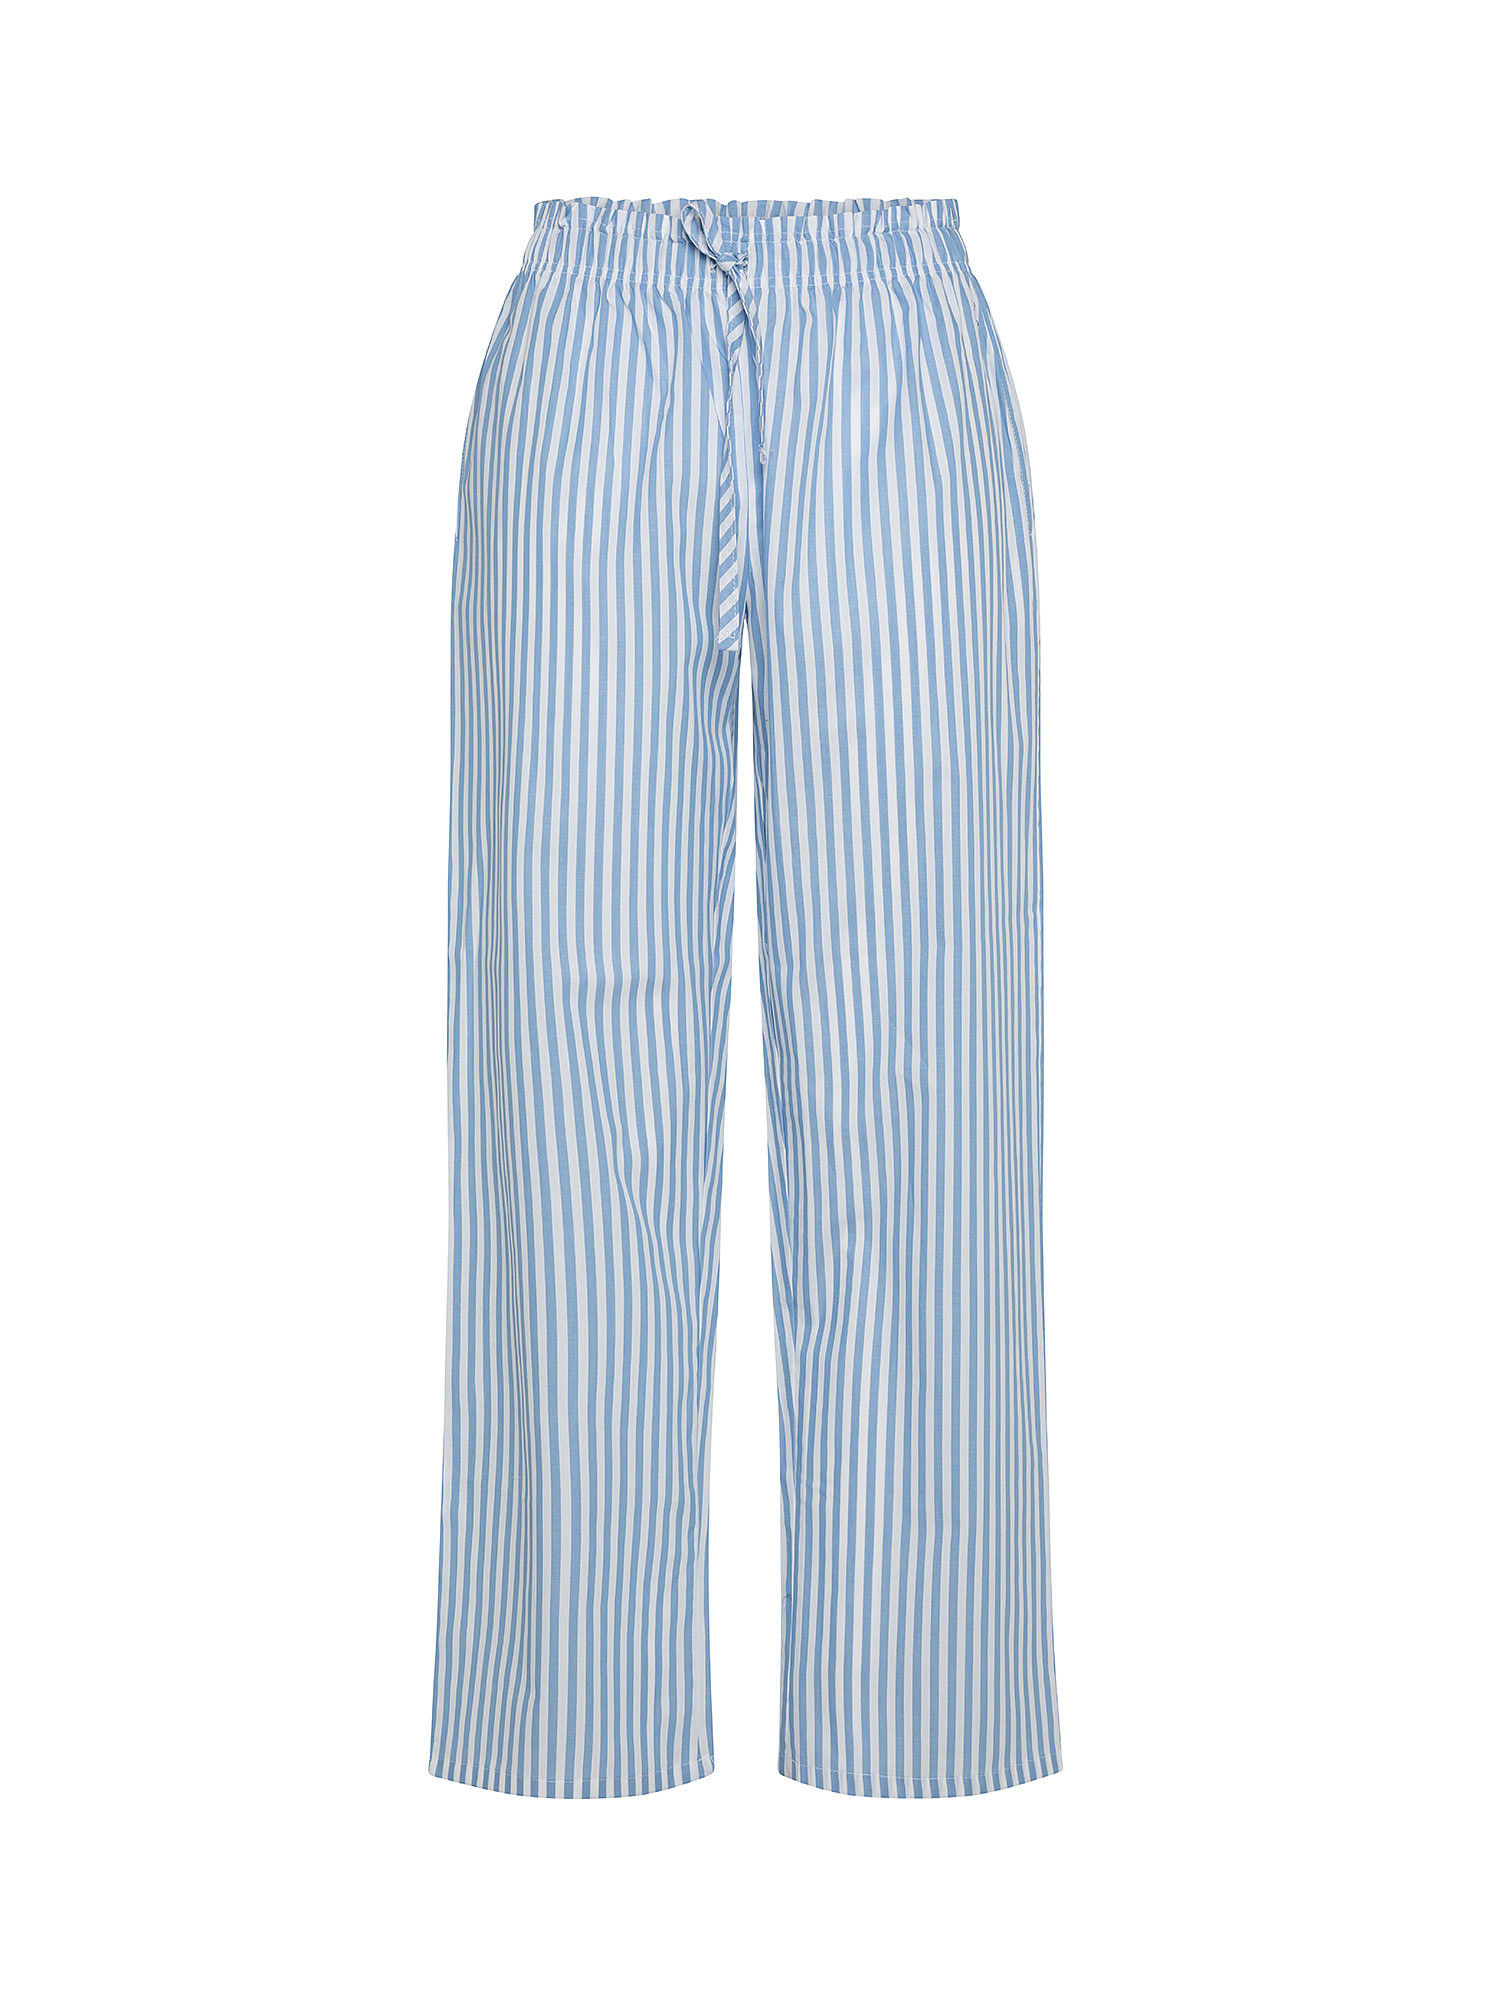 Pantaloni cotone tinto filo a righe, Blu, large